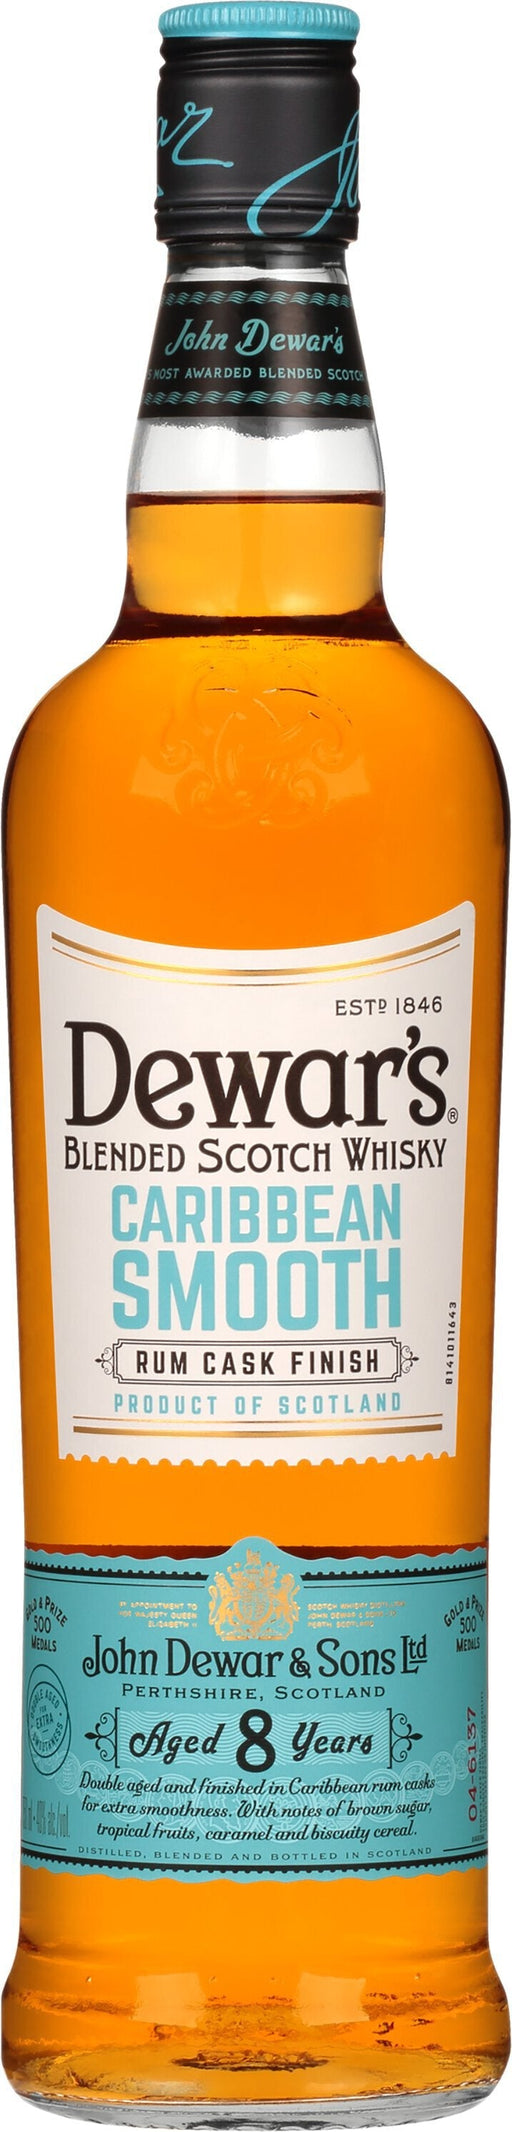 Dewars 8 Year Caribbean Smooth Rum Cask Finish Blended Scotch Whisky - All Kosher Wines - kosher